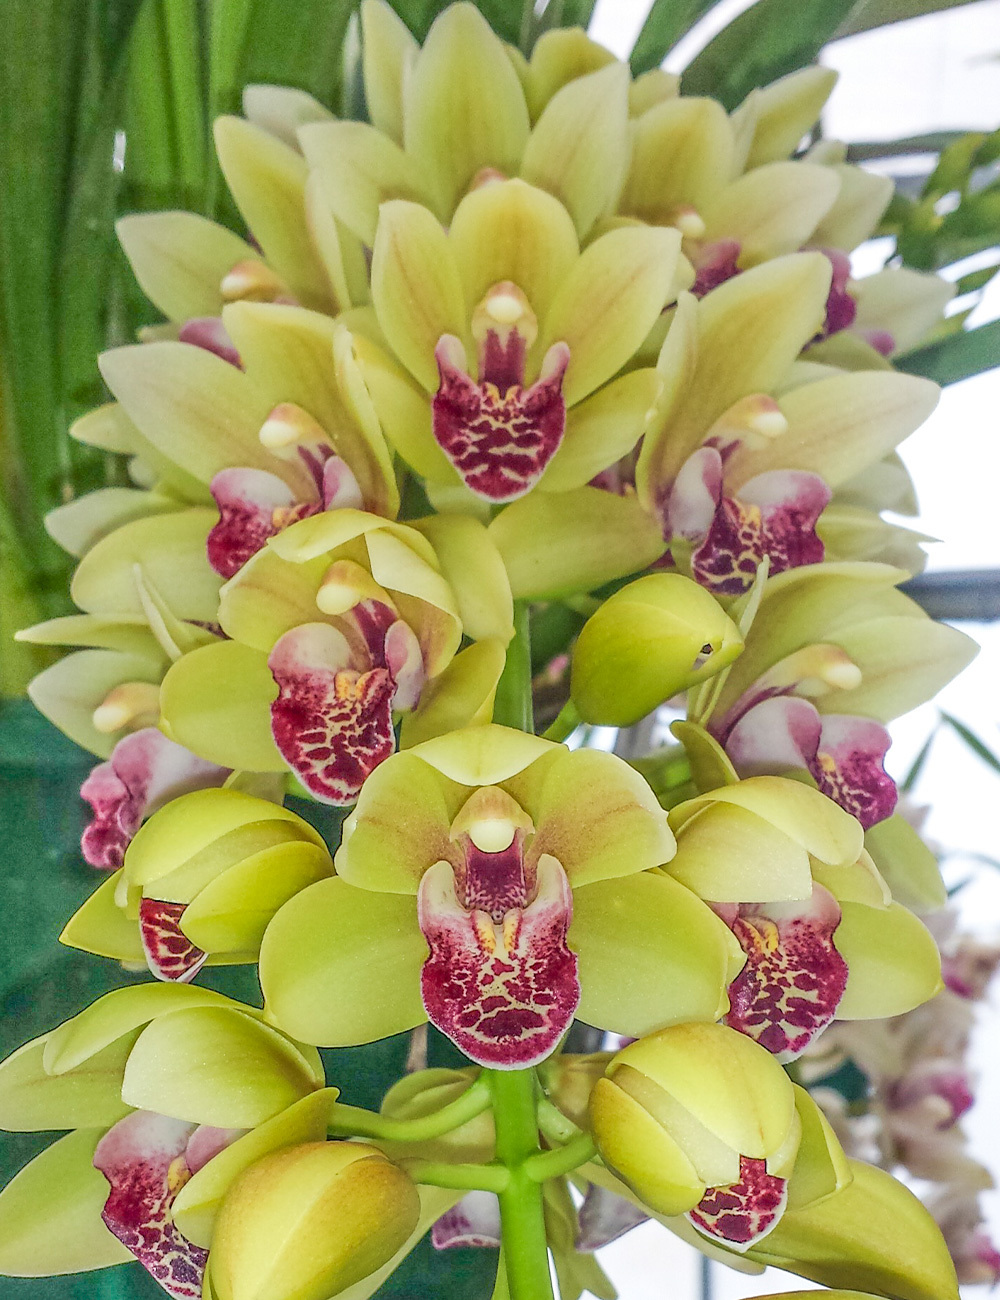 Cascading Cymbidium Orchids Mary Green 'Limelight'